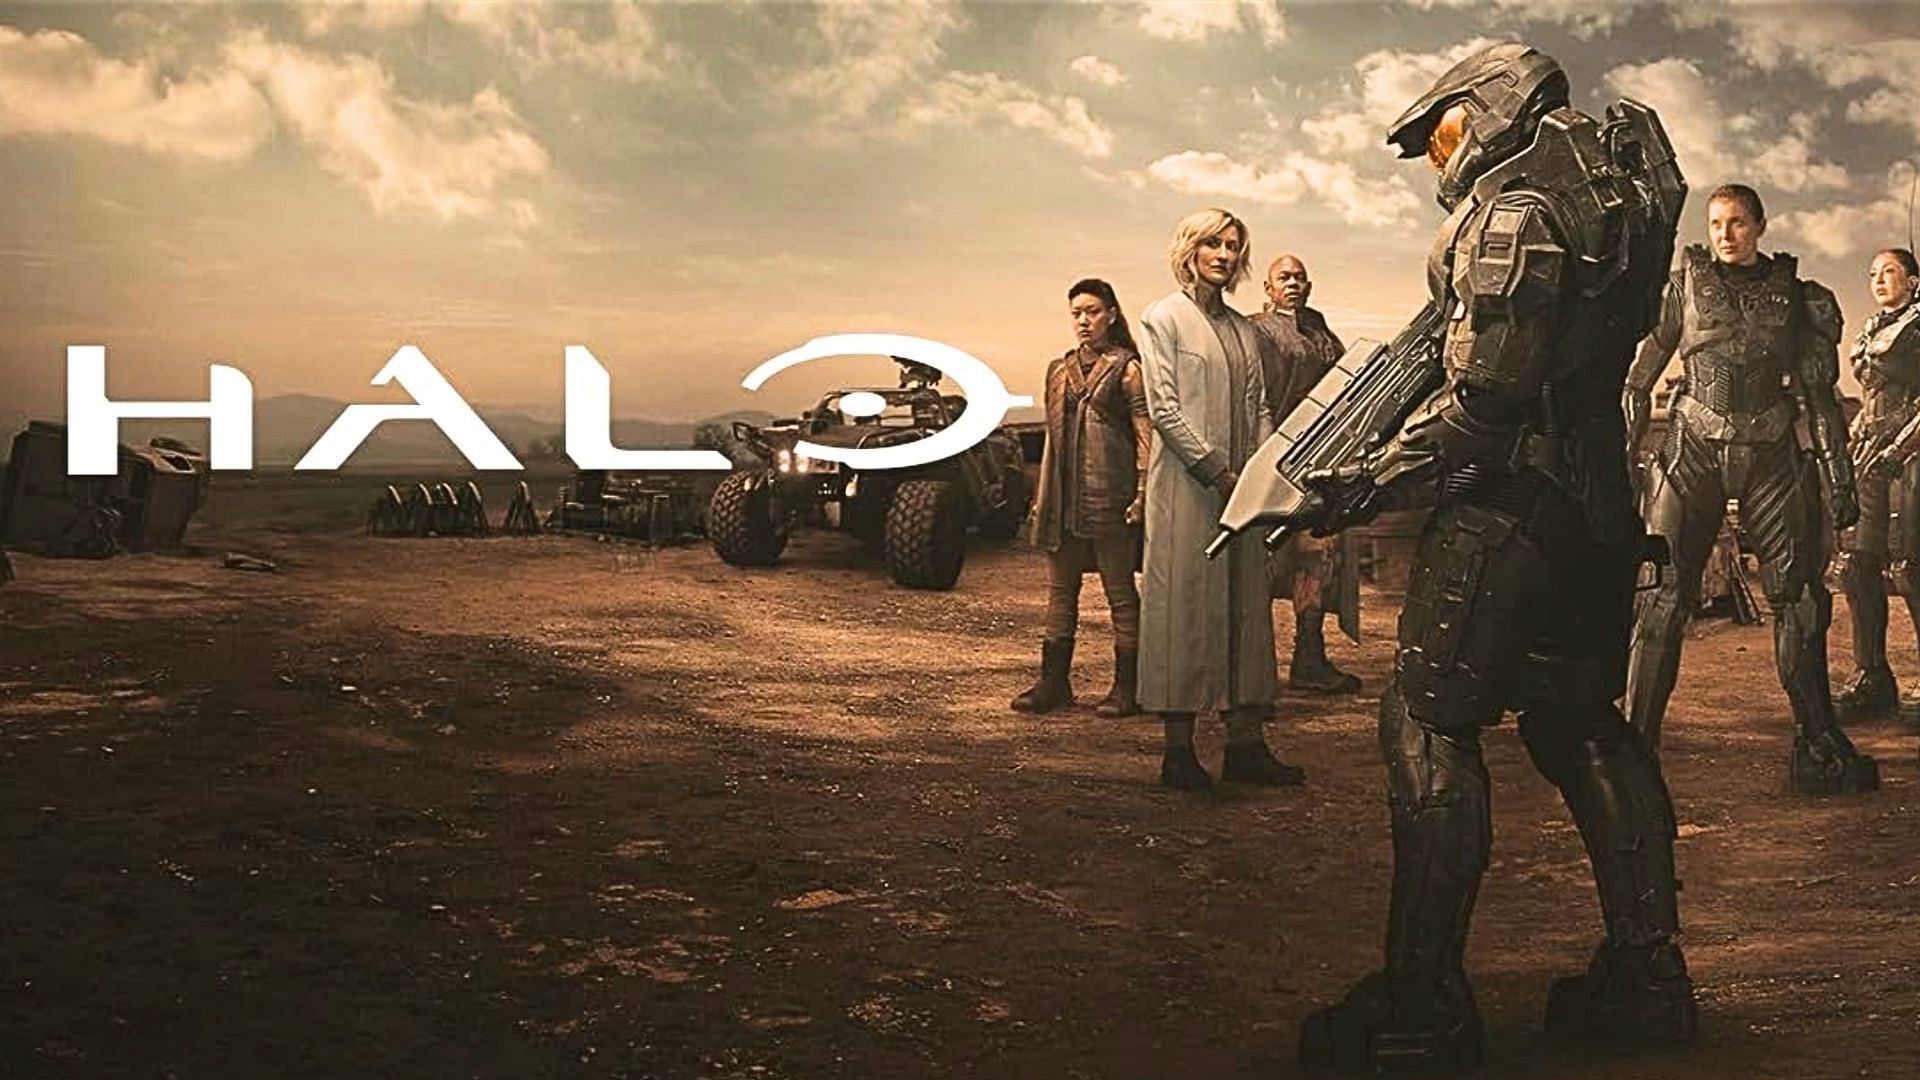 Halo Season 2 Episode 3 is filled with revelations (Image via Paramount+)